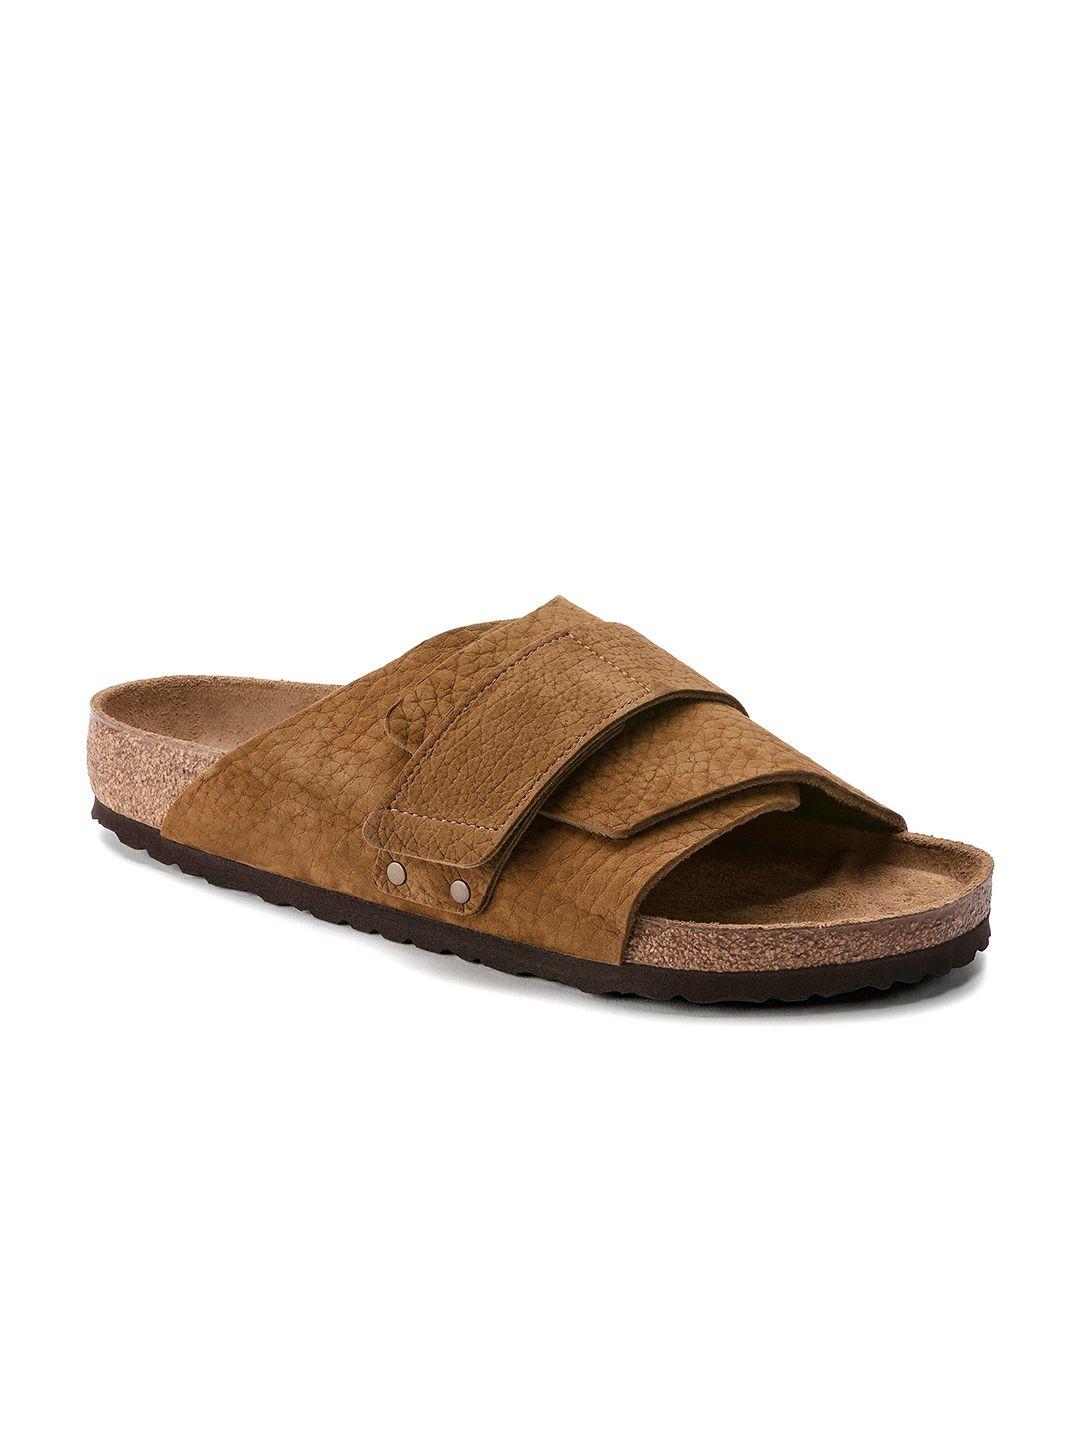 birkenstock men brown regular width kyoto leather one-strap sandals